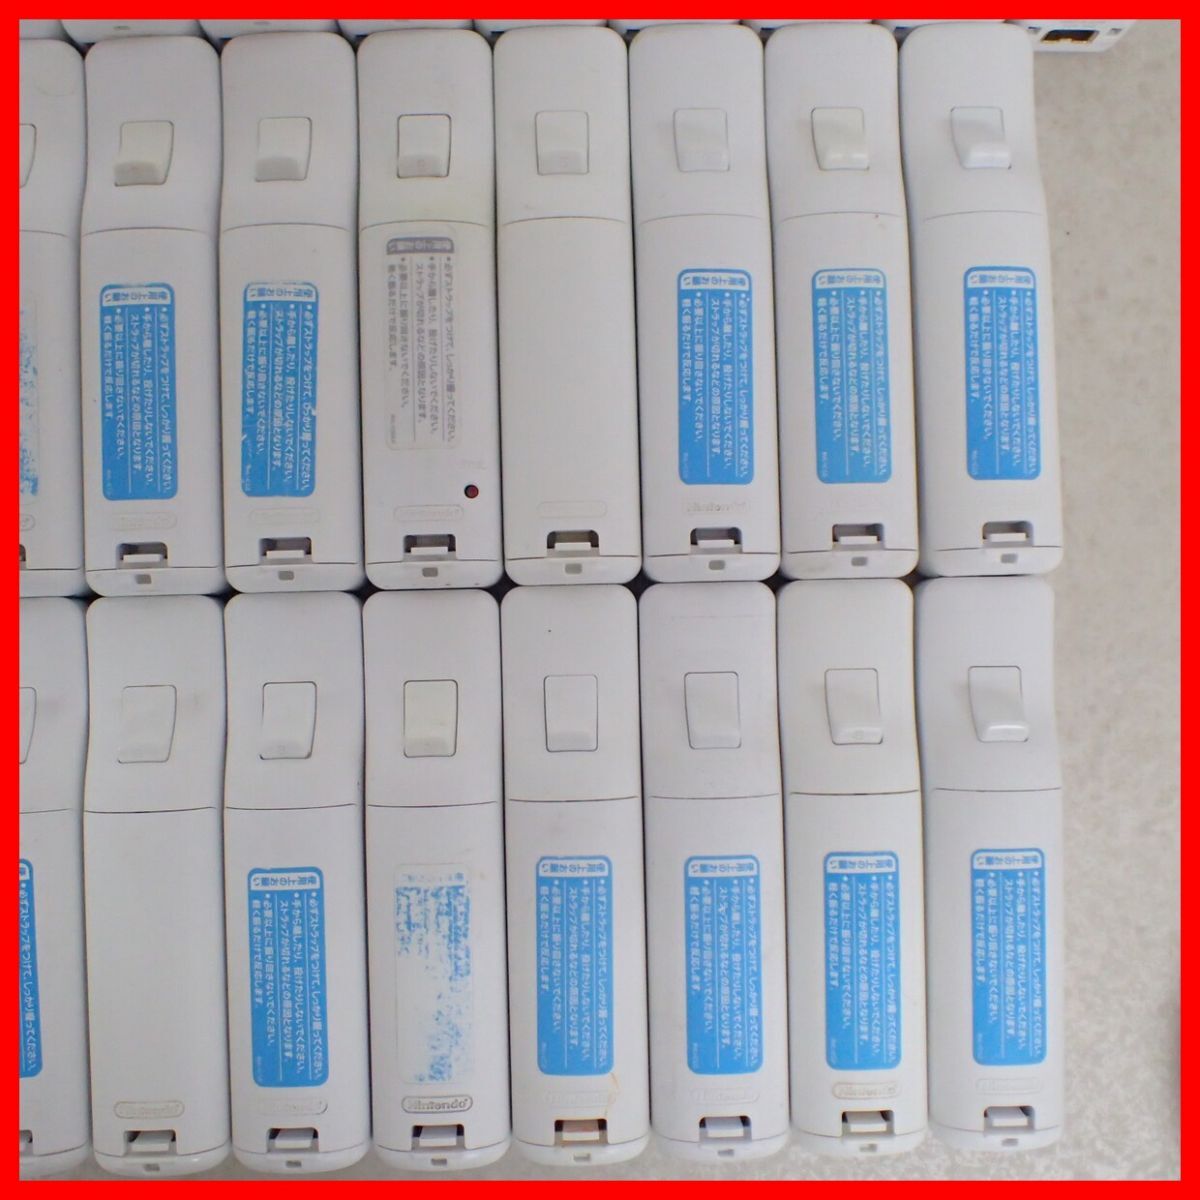 Wii remote control controller RVL-003 white together 50 piece large amount set nintendo Nintendo[20